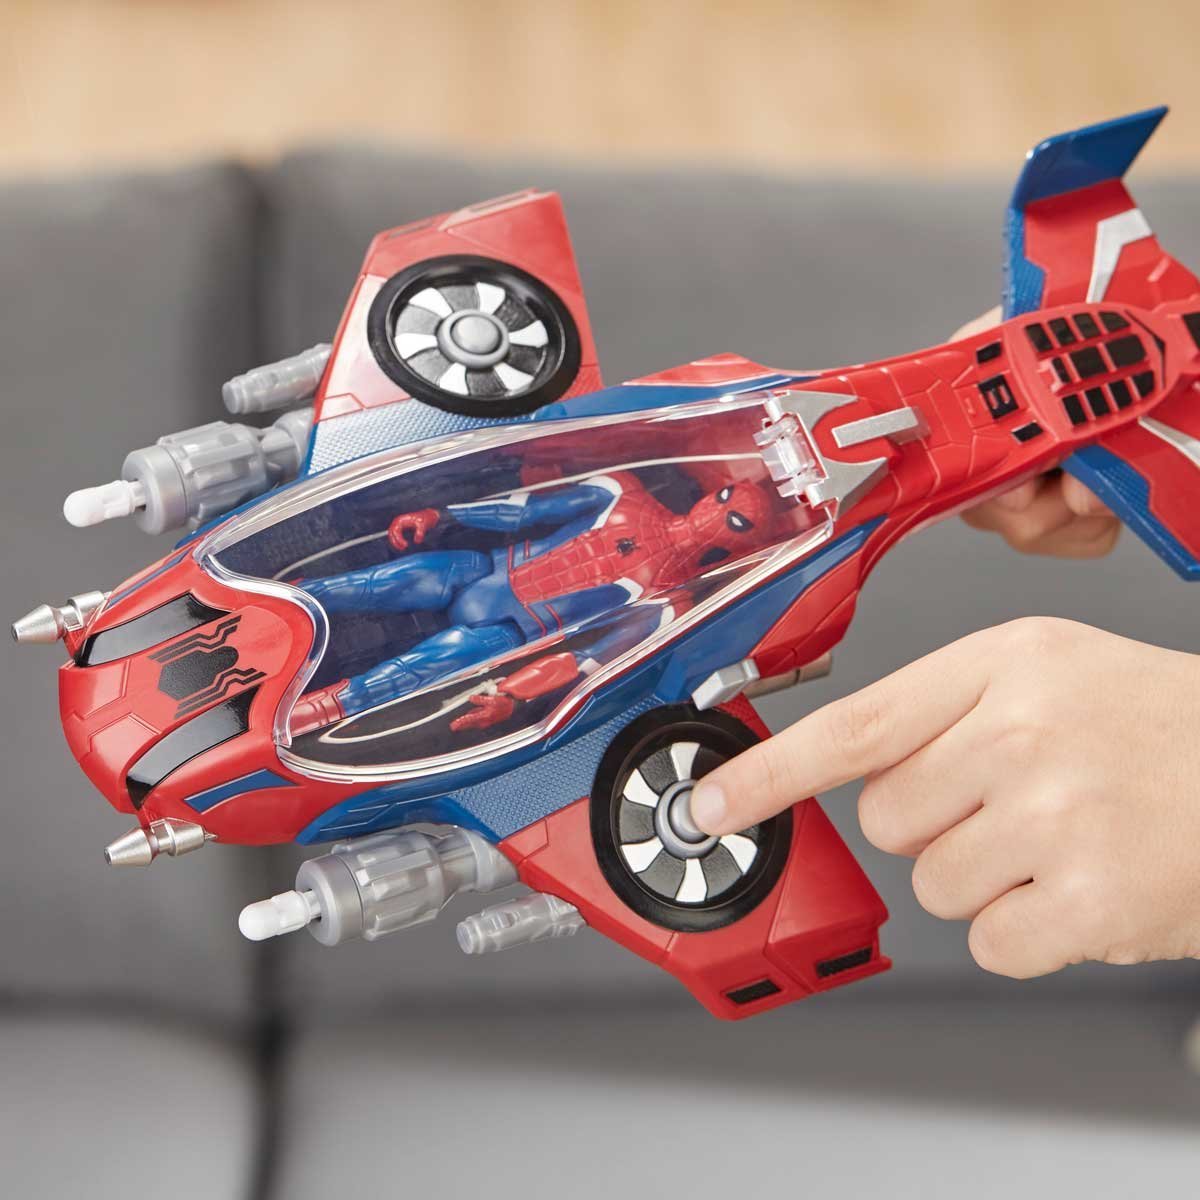 Spider-Jet con Spiderman Hasbro